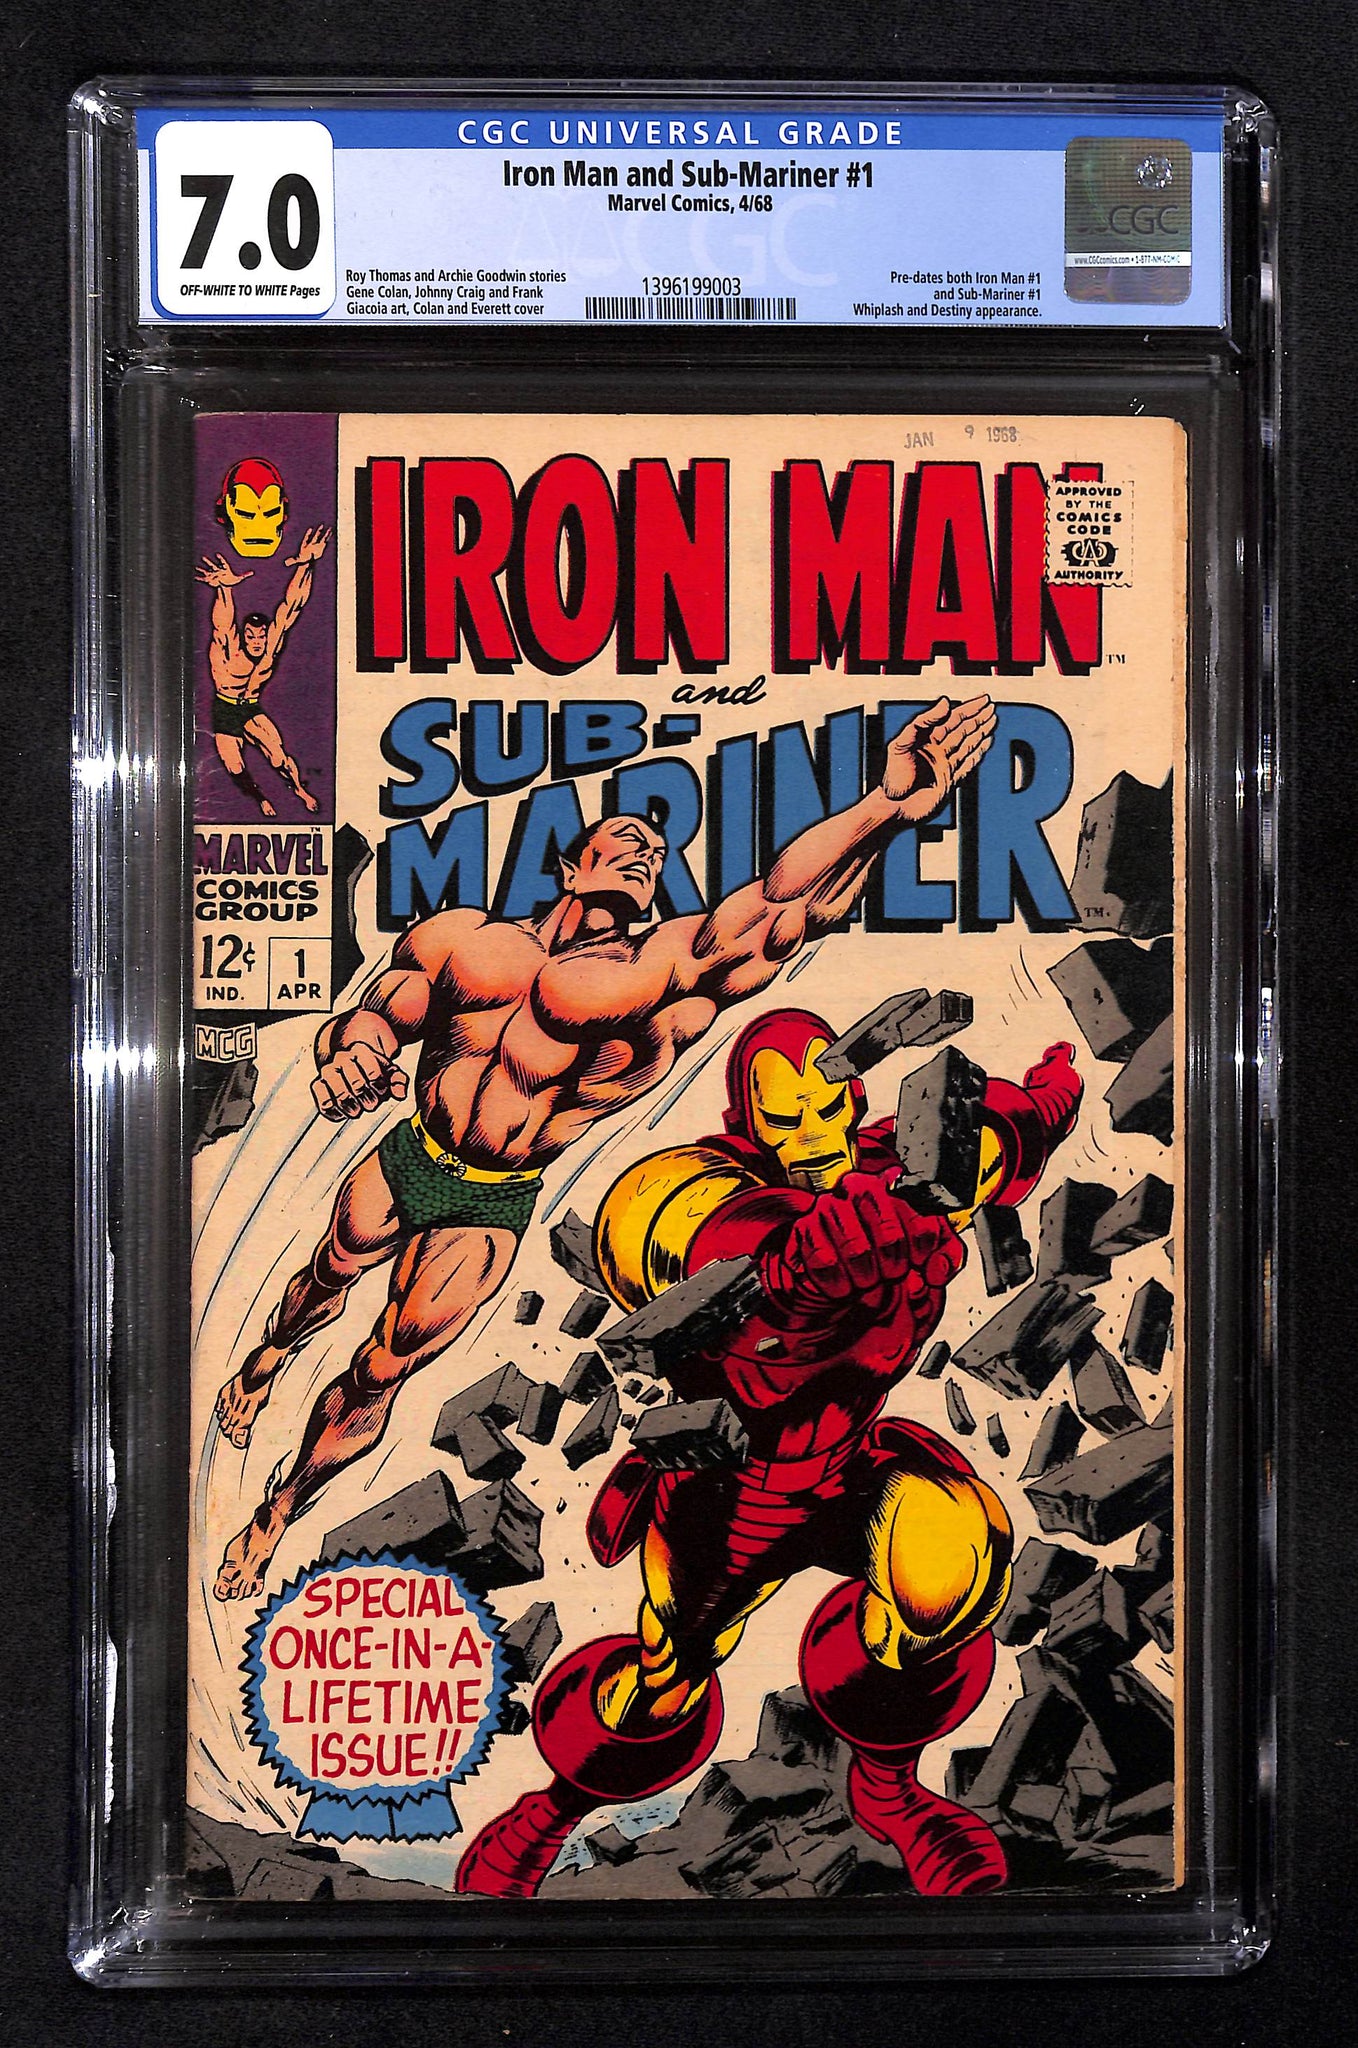 Iron Man and Sub-Mariner #1 CGC 7.0 Pre-dates both Iron Man #1 and Sub-Mariner #1